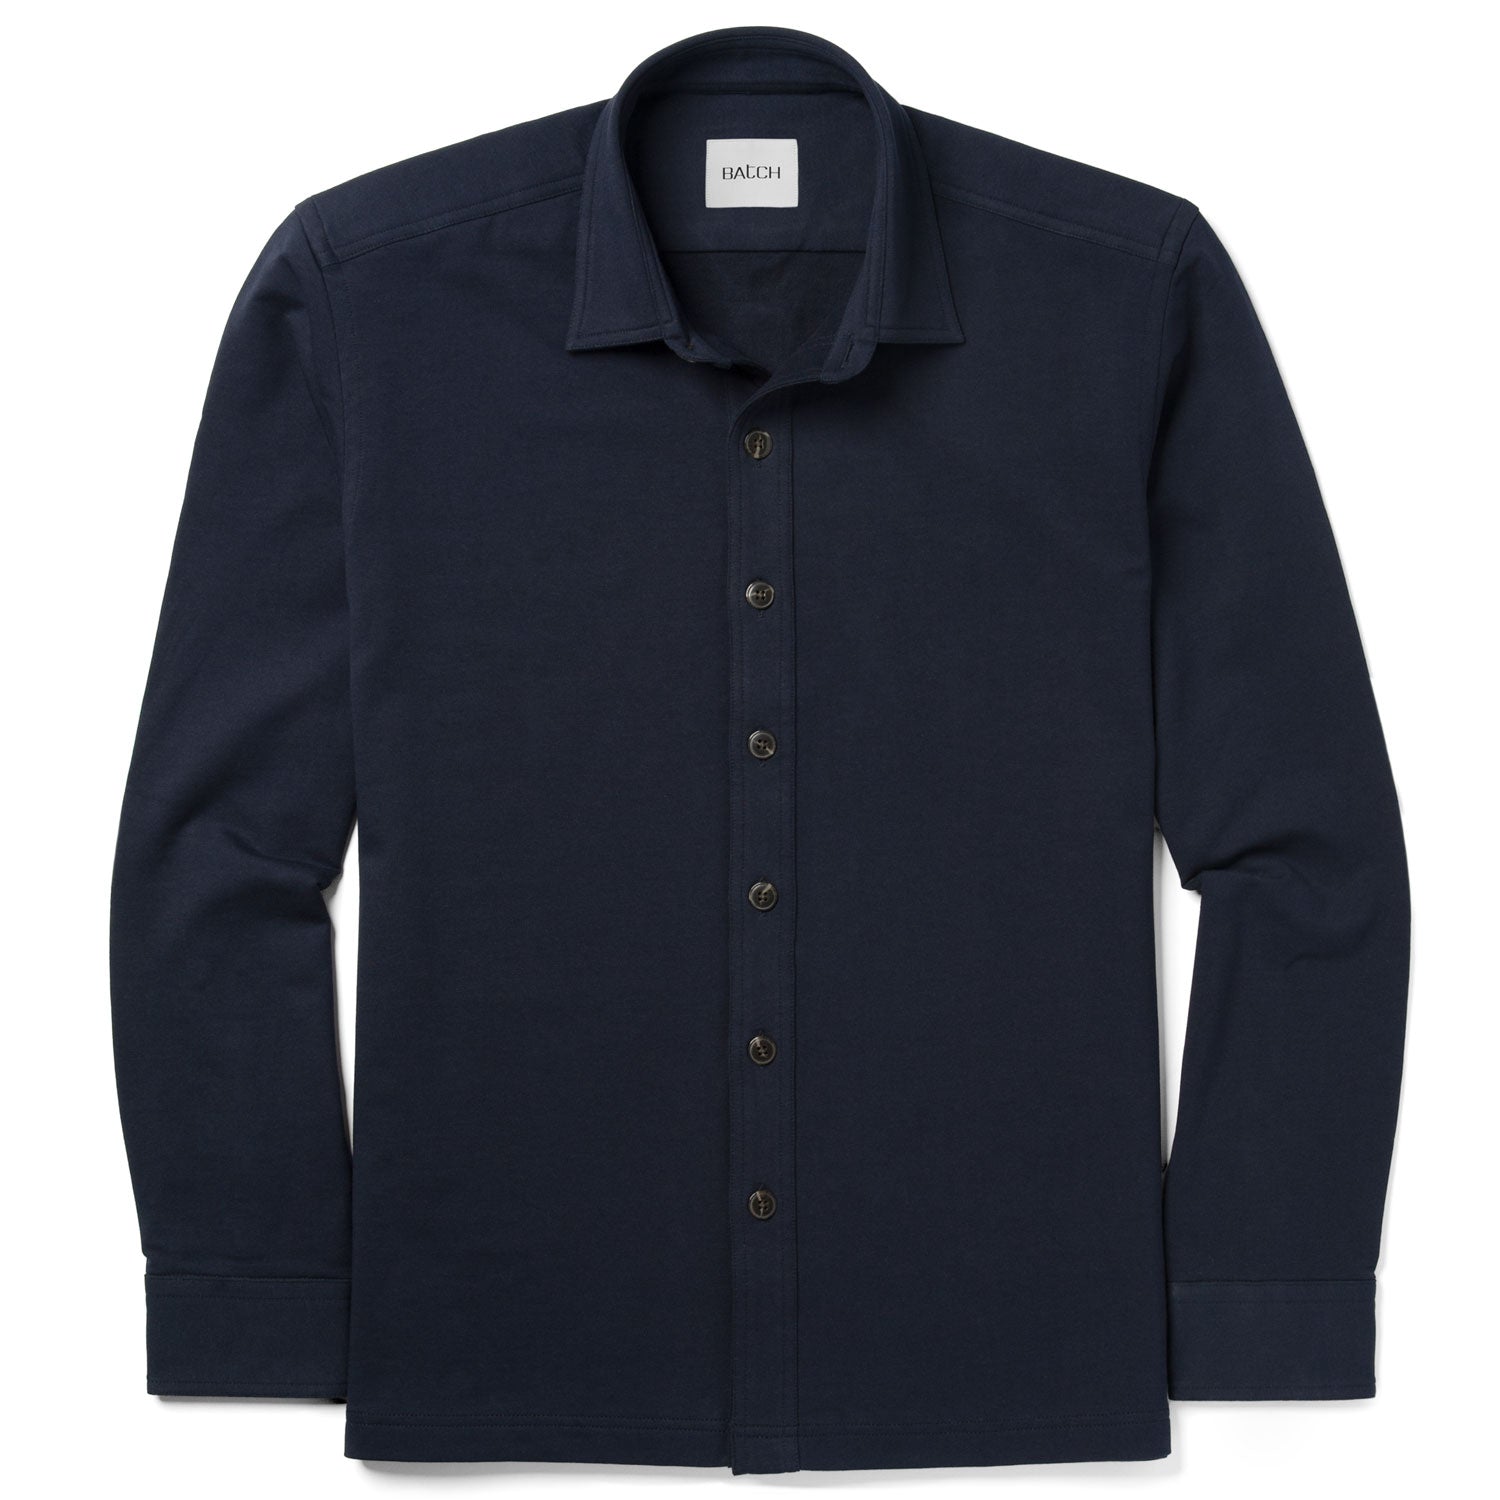 Essential Sweatshirt Shirt - Navy Cotton French Terry